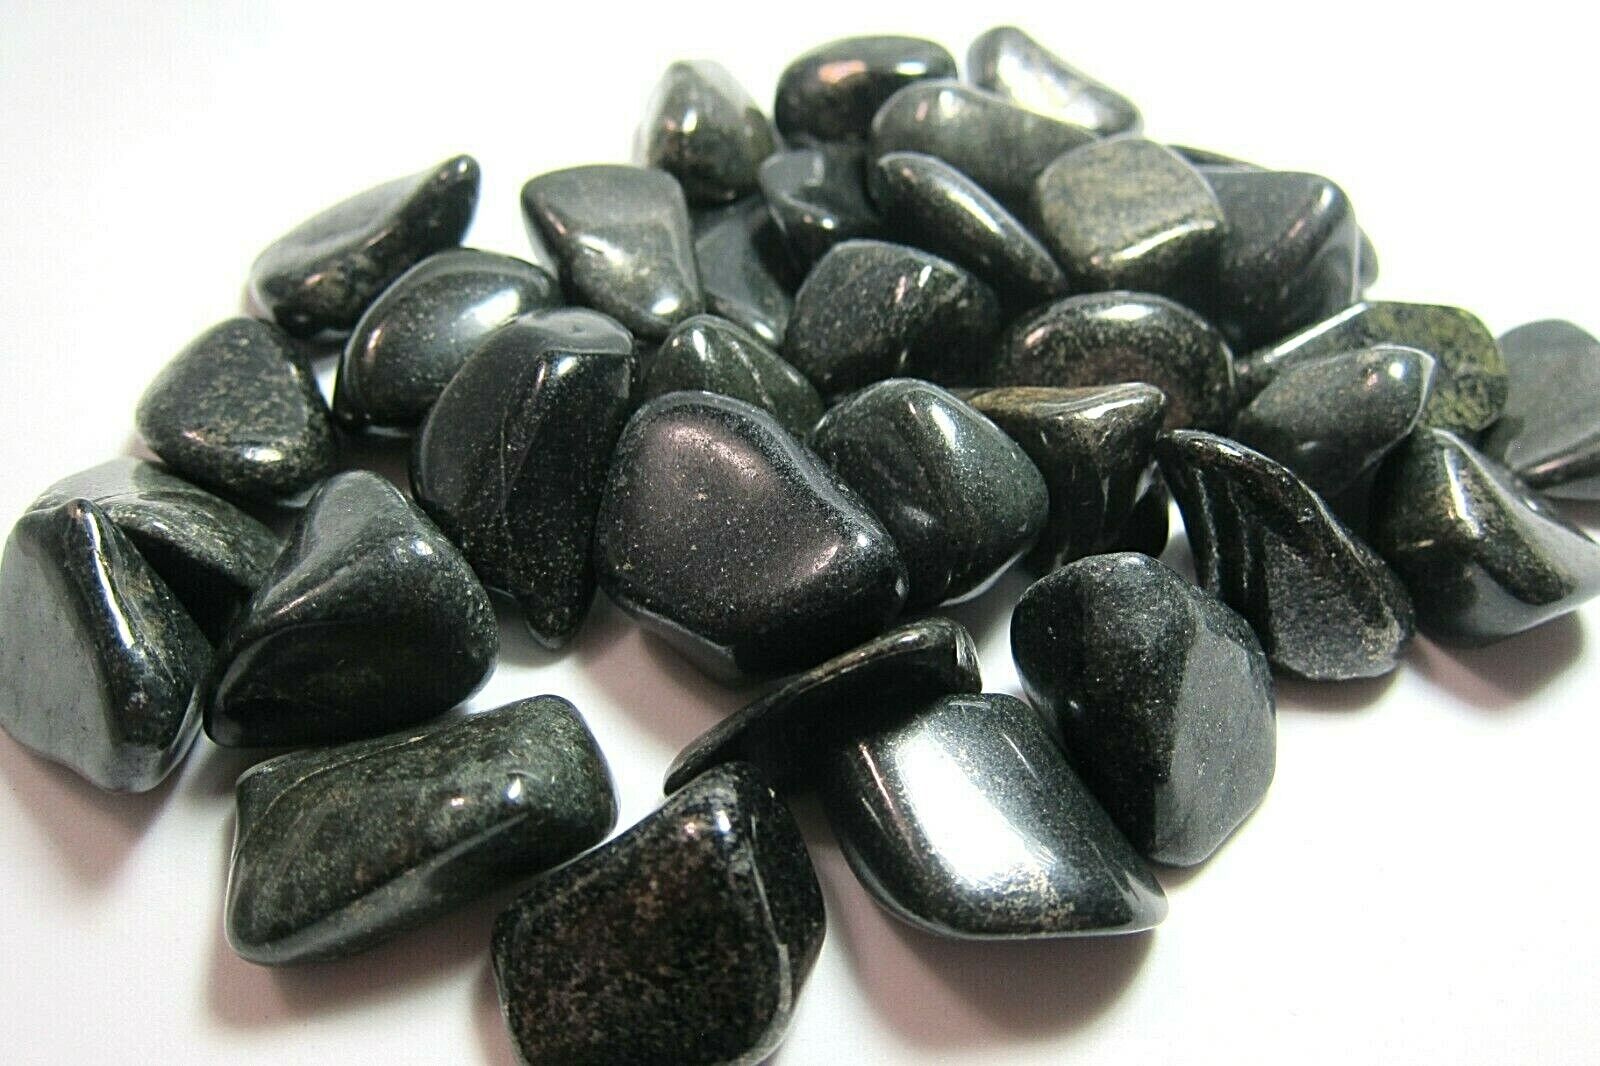 6X Black Lemurian Jade Tumbled Stones 20-25mm Reiki Healing Crystals Past Abuse 